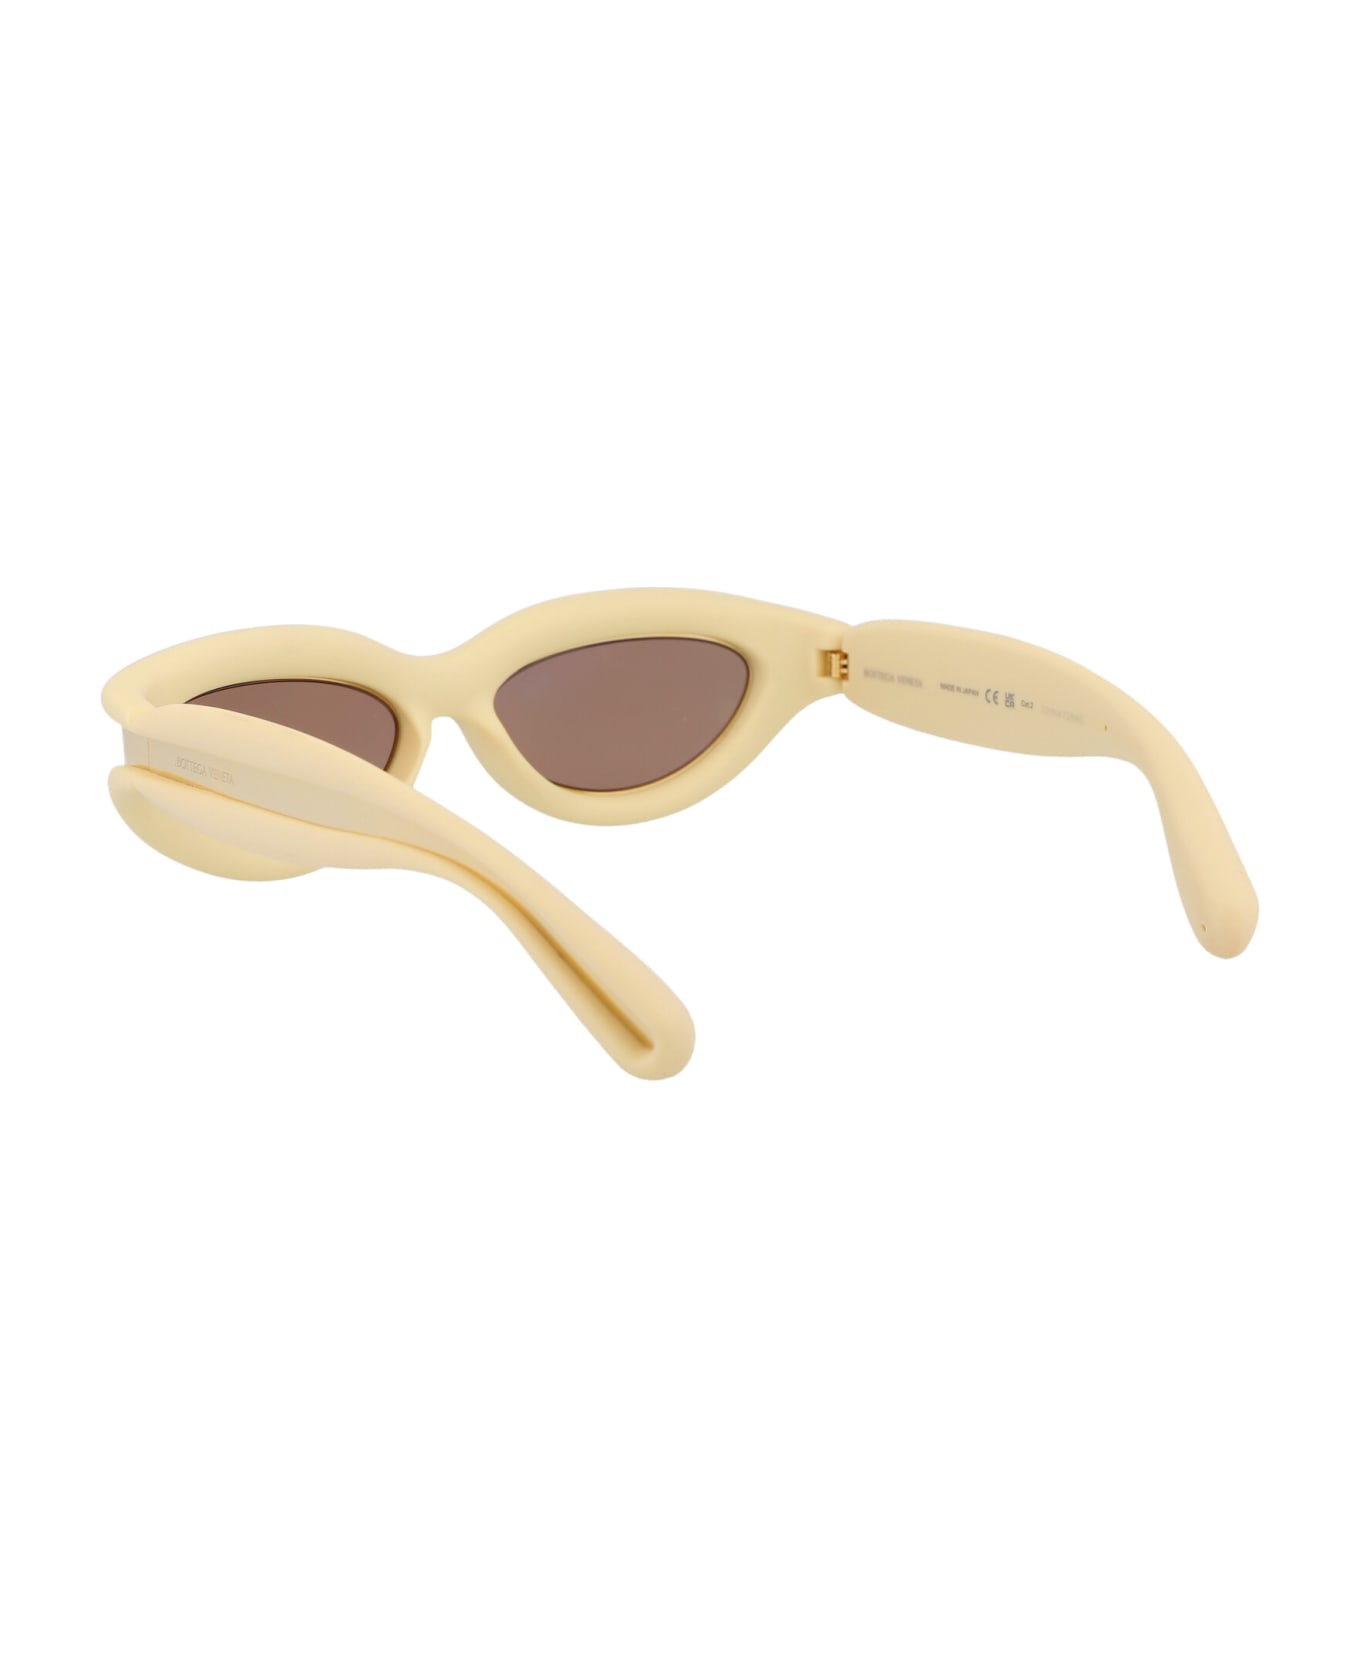 Bottega Veneta Eyewear Bv1211s Sunglasses - 005 GOLD GOLD BROWN サングラス